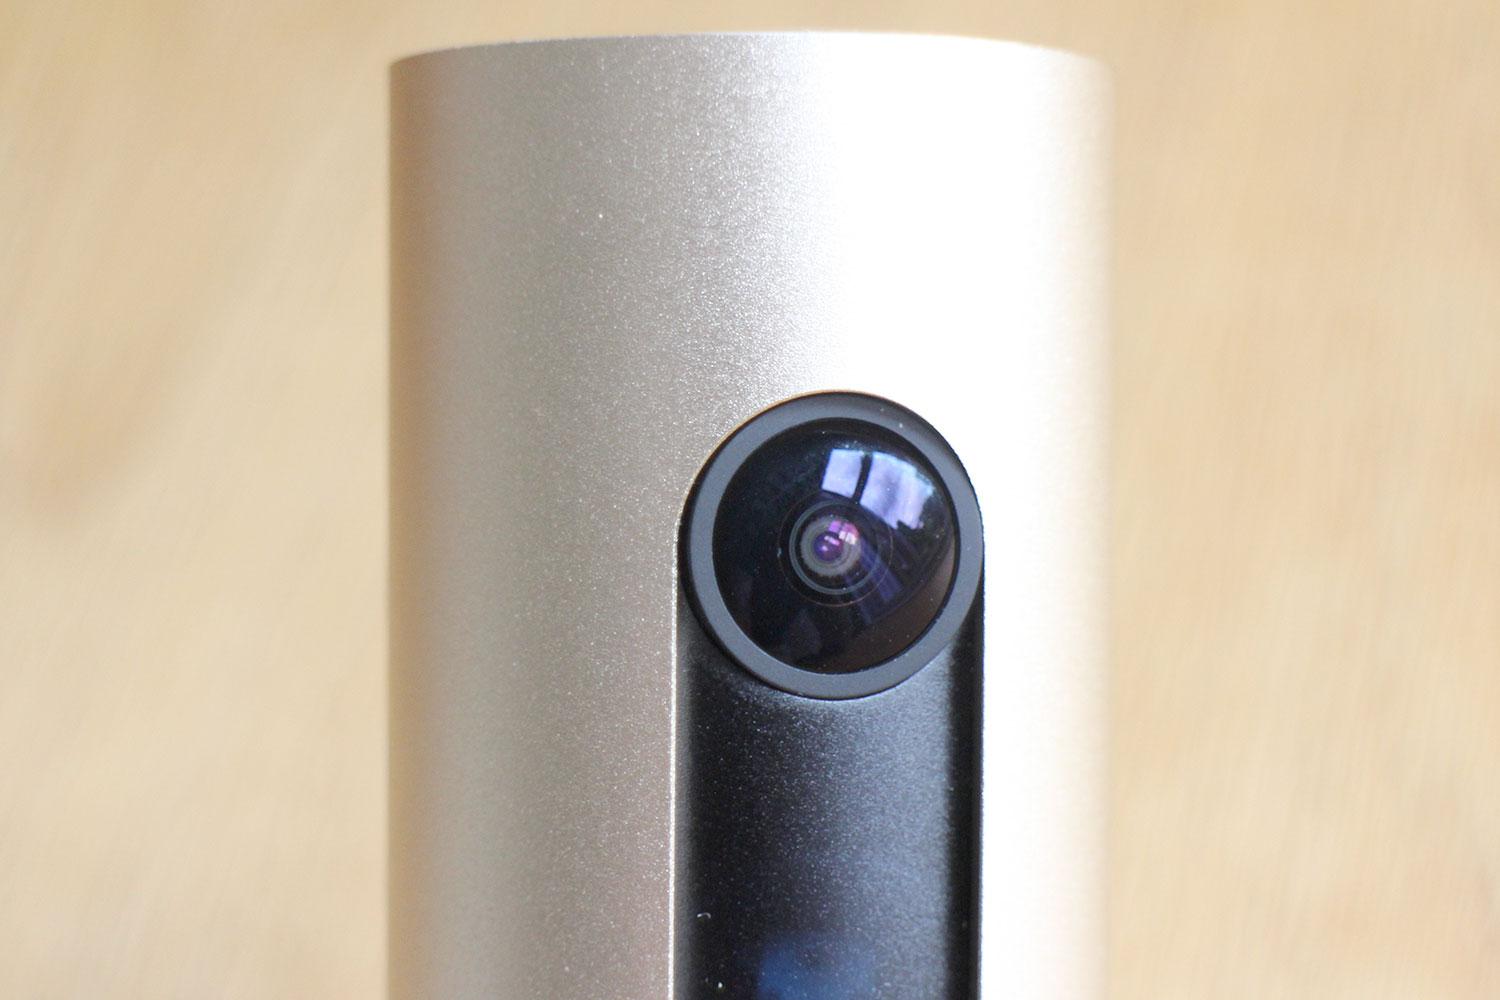 Testing the 'Netatmo Welcome' Smart Camera